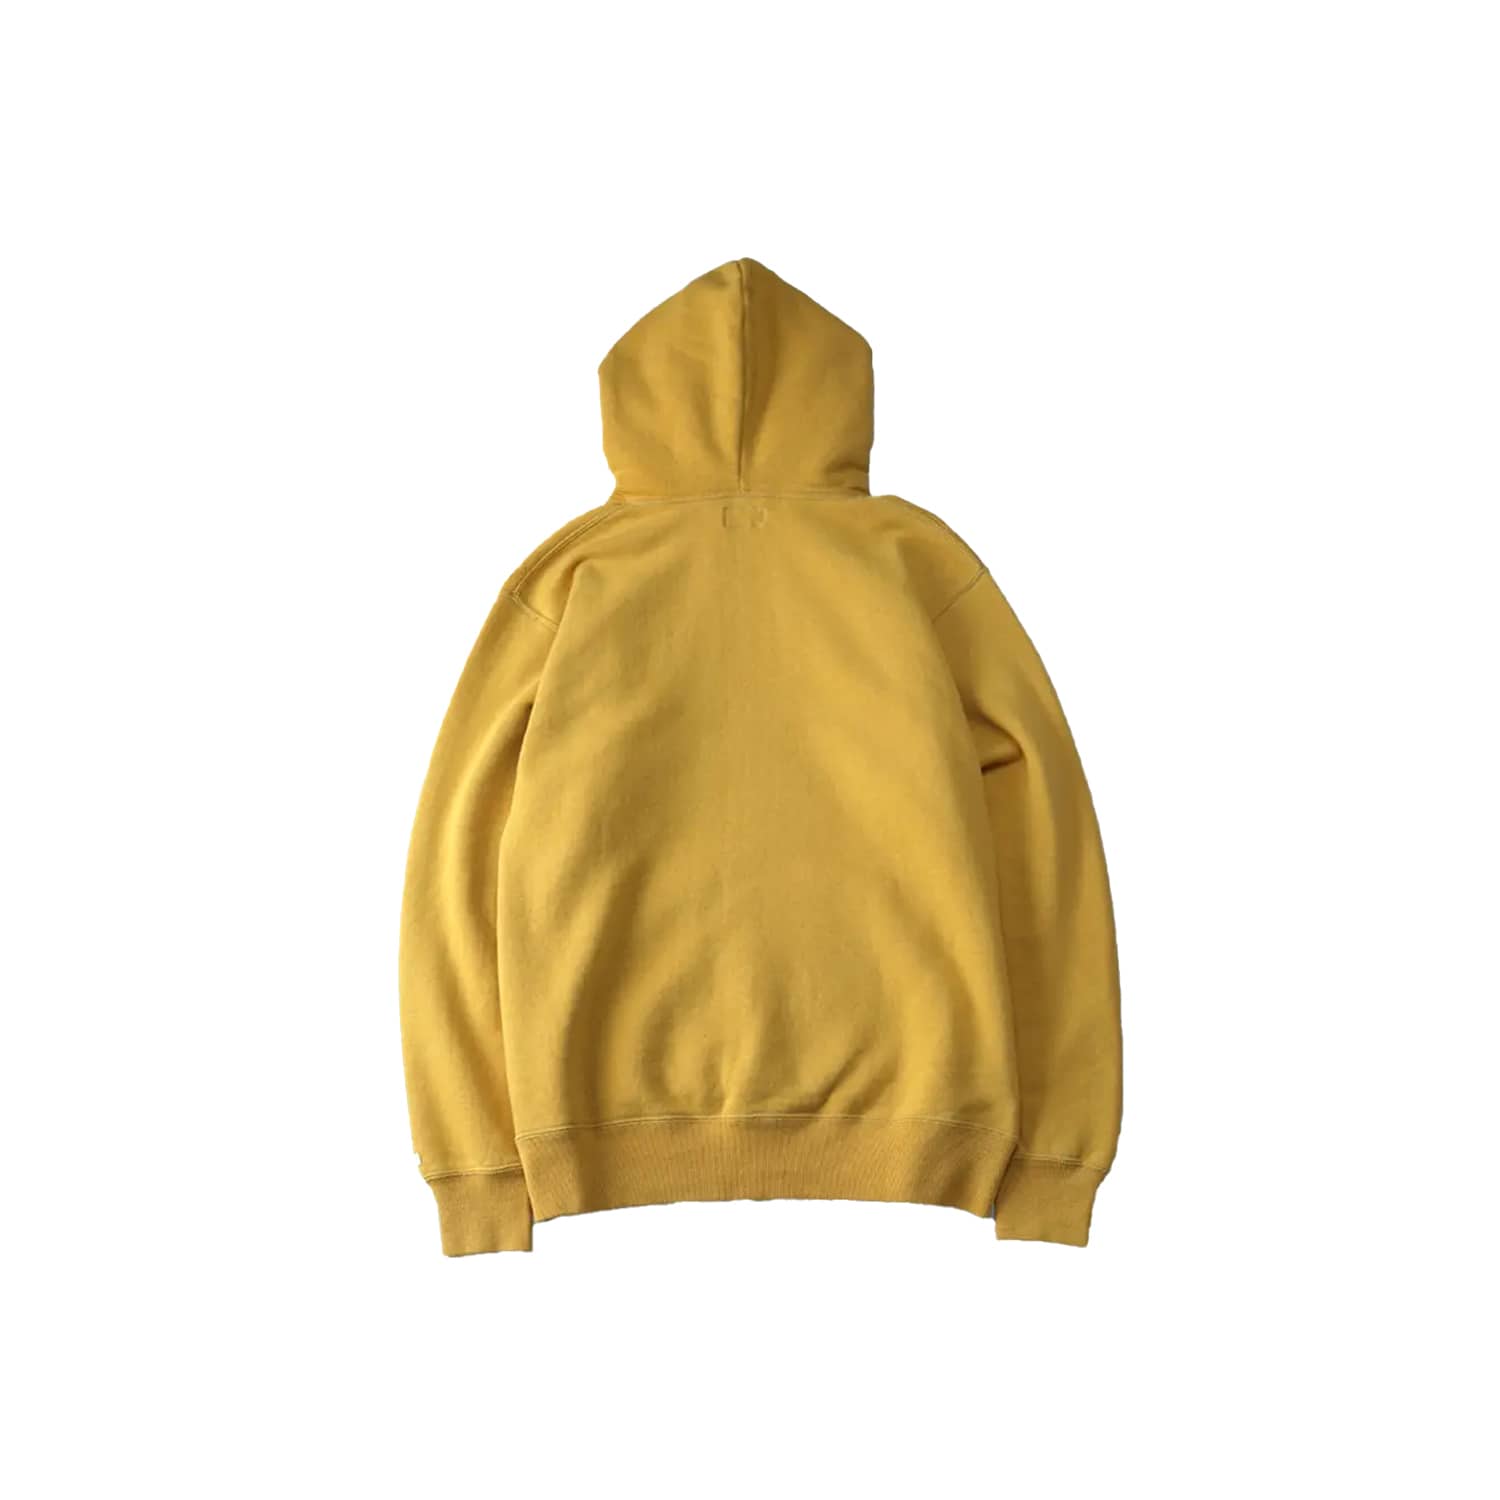 The Flat Head Sweatshirt Hoodie Brushed Lining Mustard